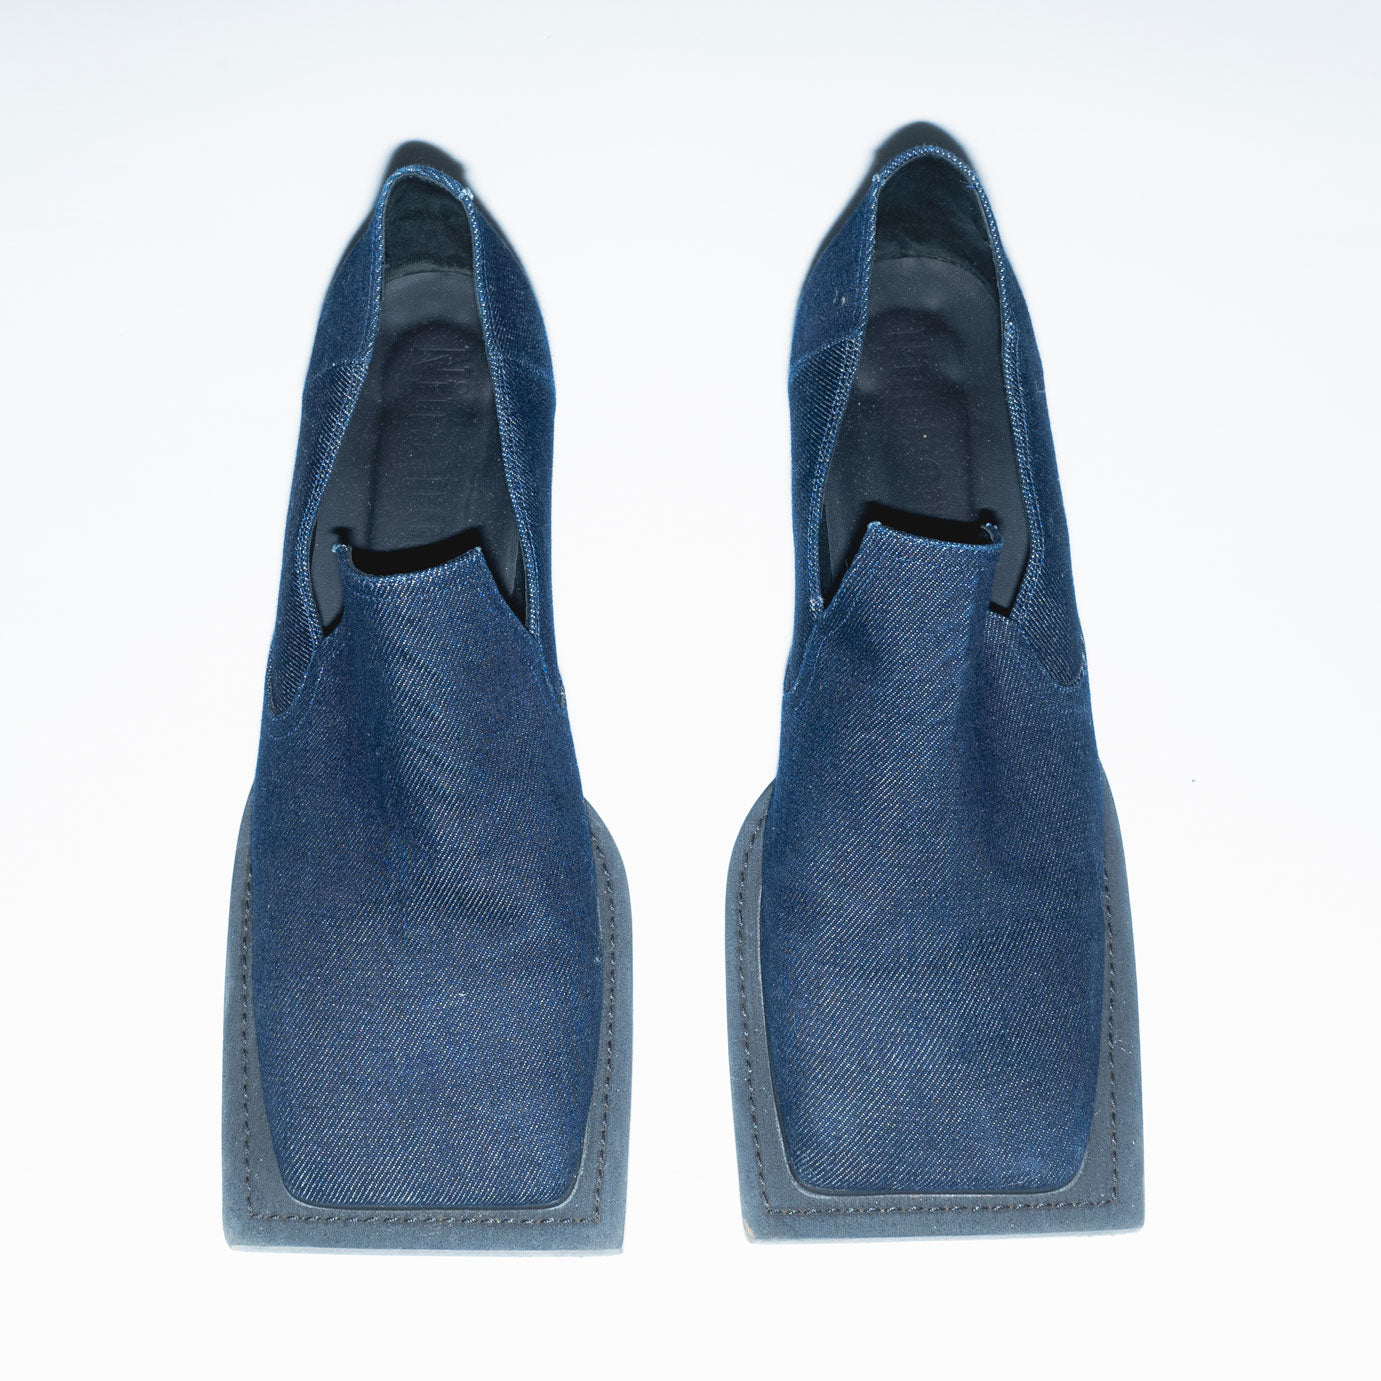 Archive Howled Loafers in Dark Blue Denim